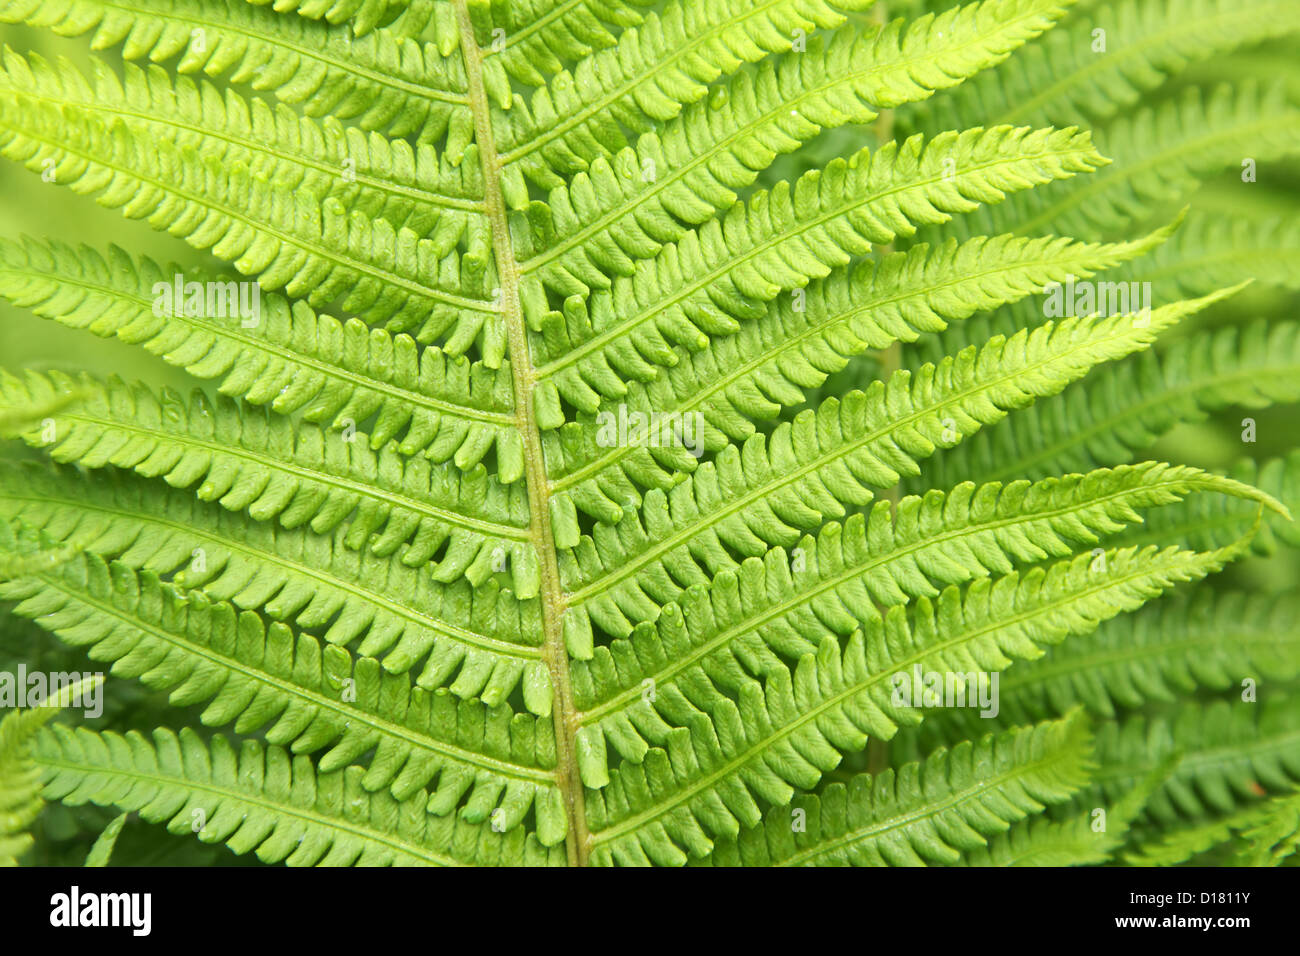 green fern leaf close-up, horizontal image Stock Photo